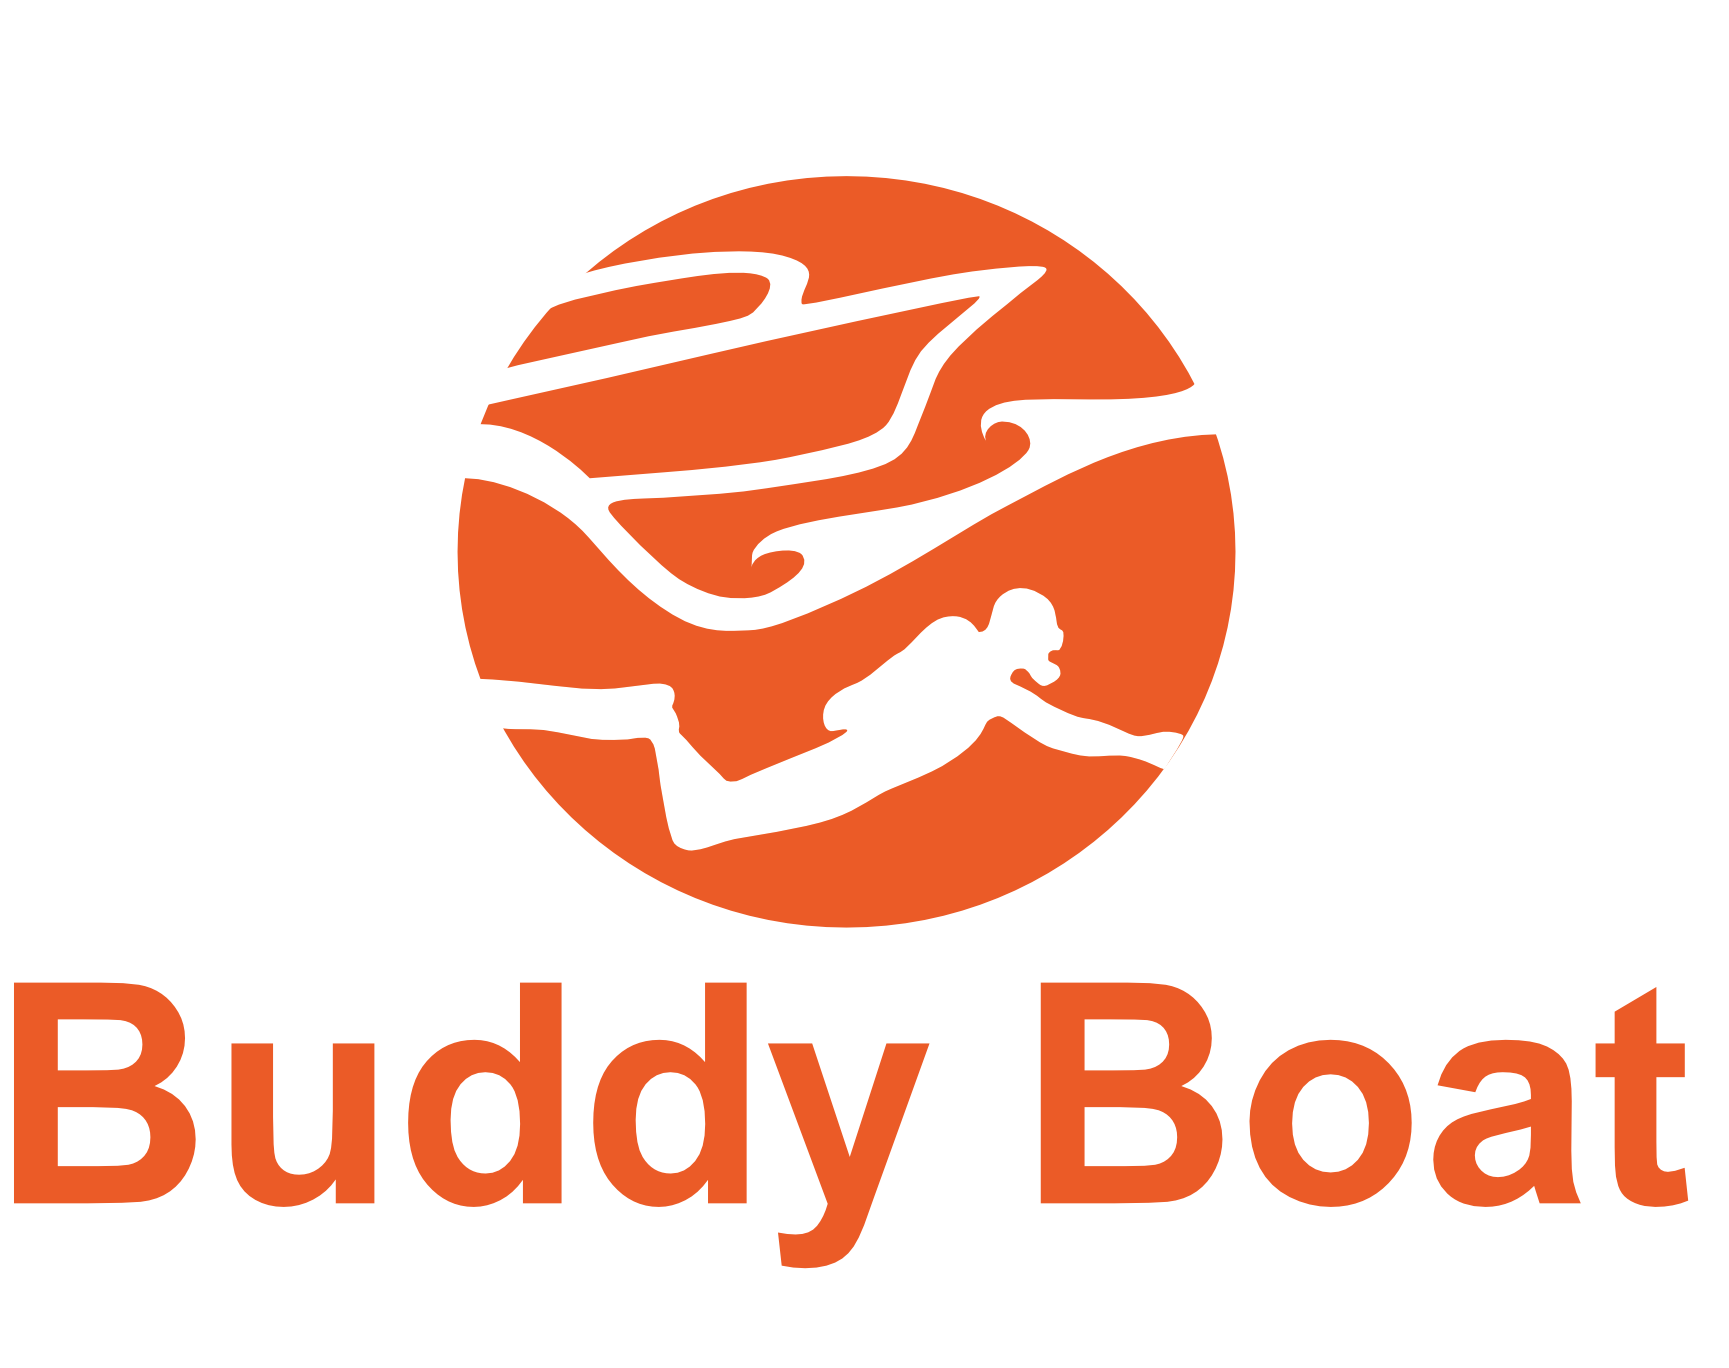 Buddy boat logo